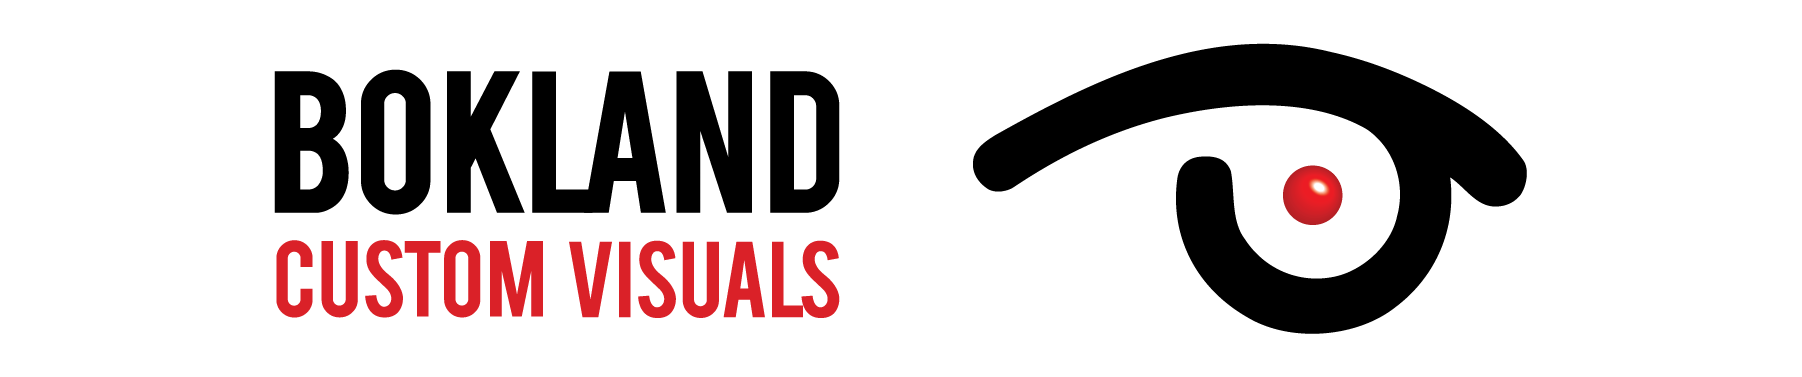 Bokland Custom Visuals Logo